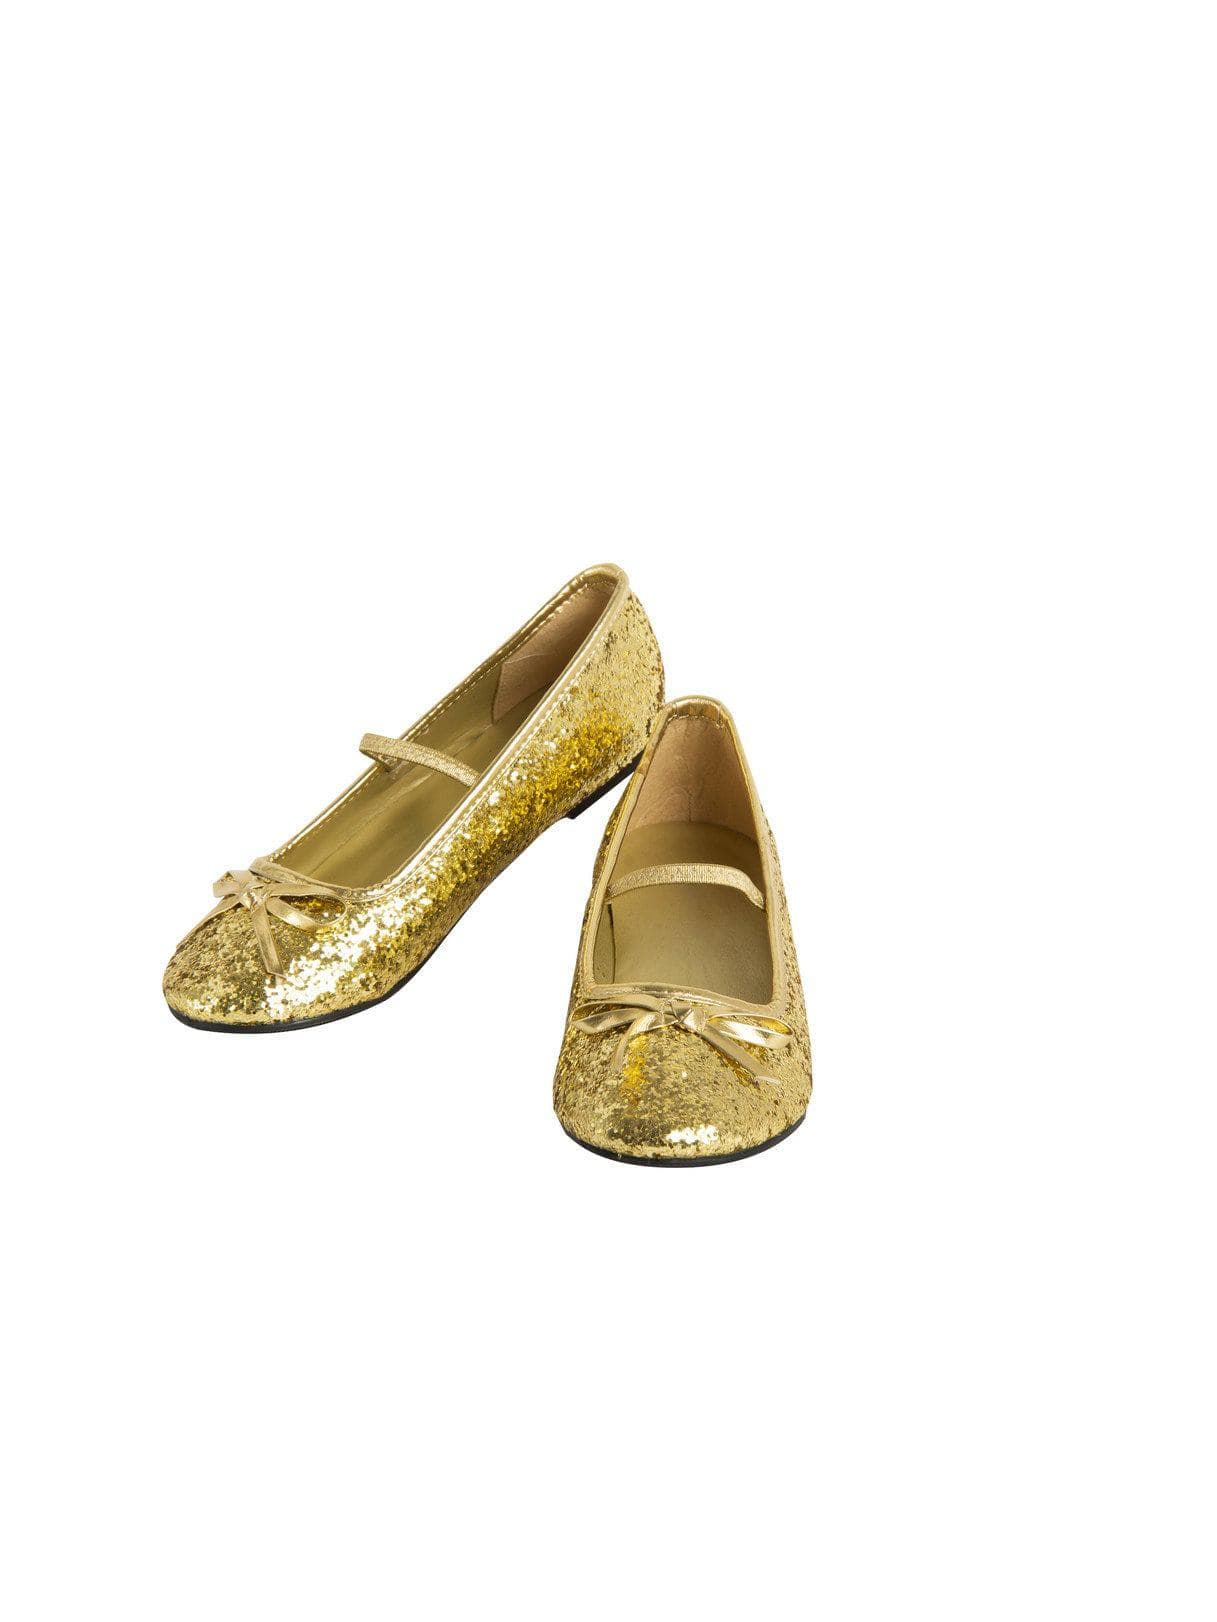 Gold Ballet Girls Shoe - costumes.com